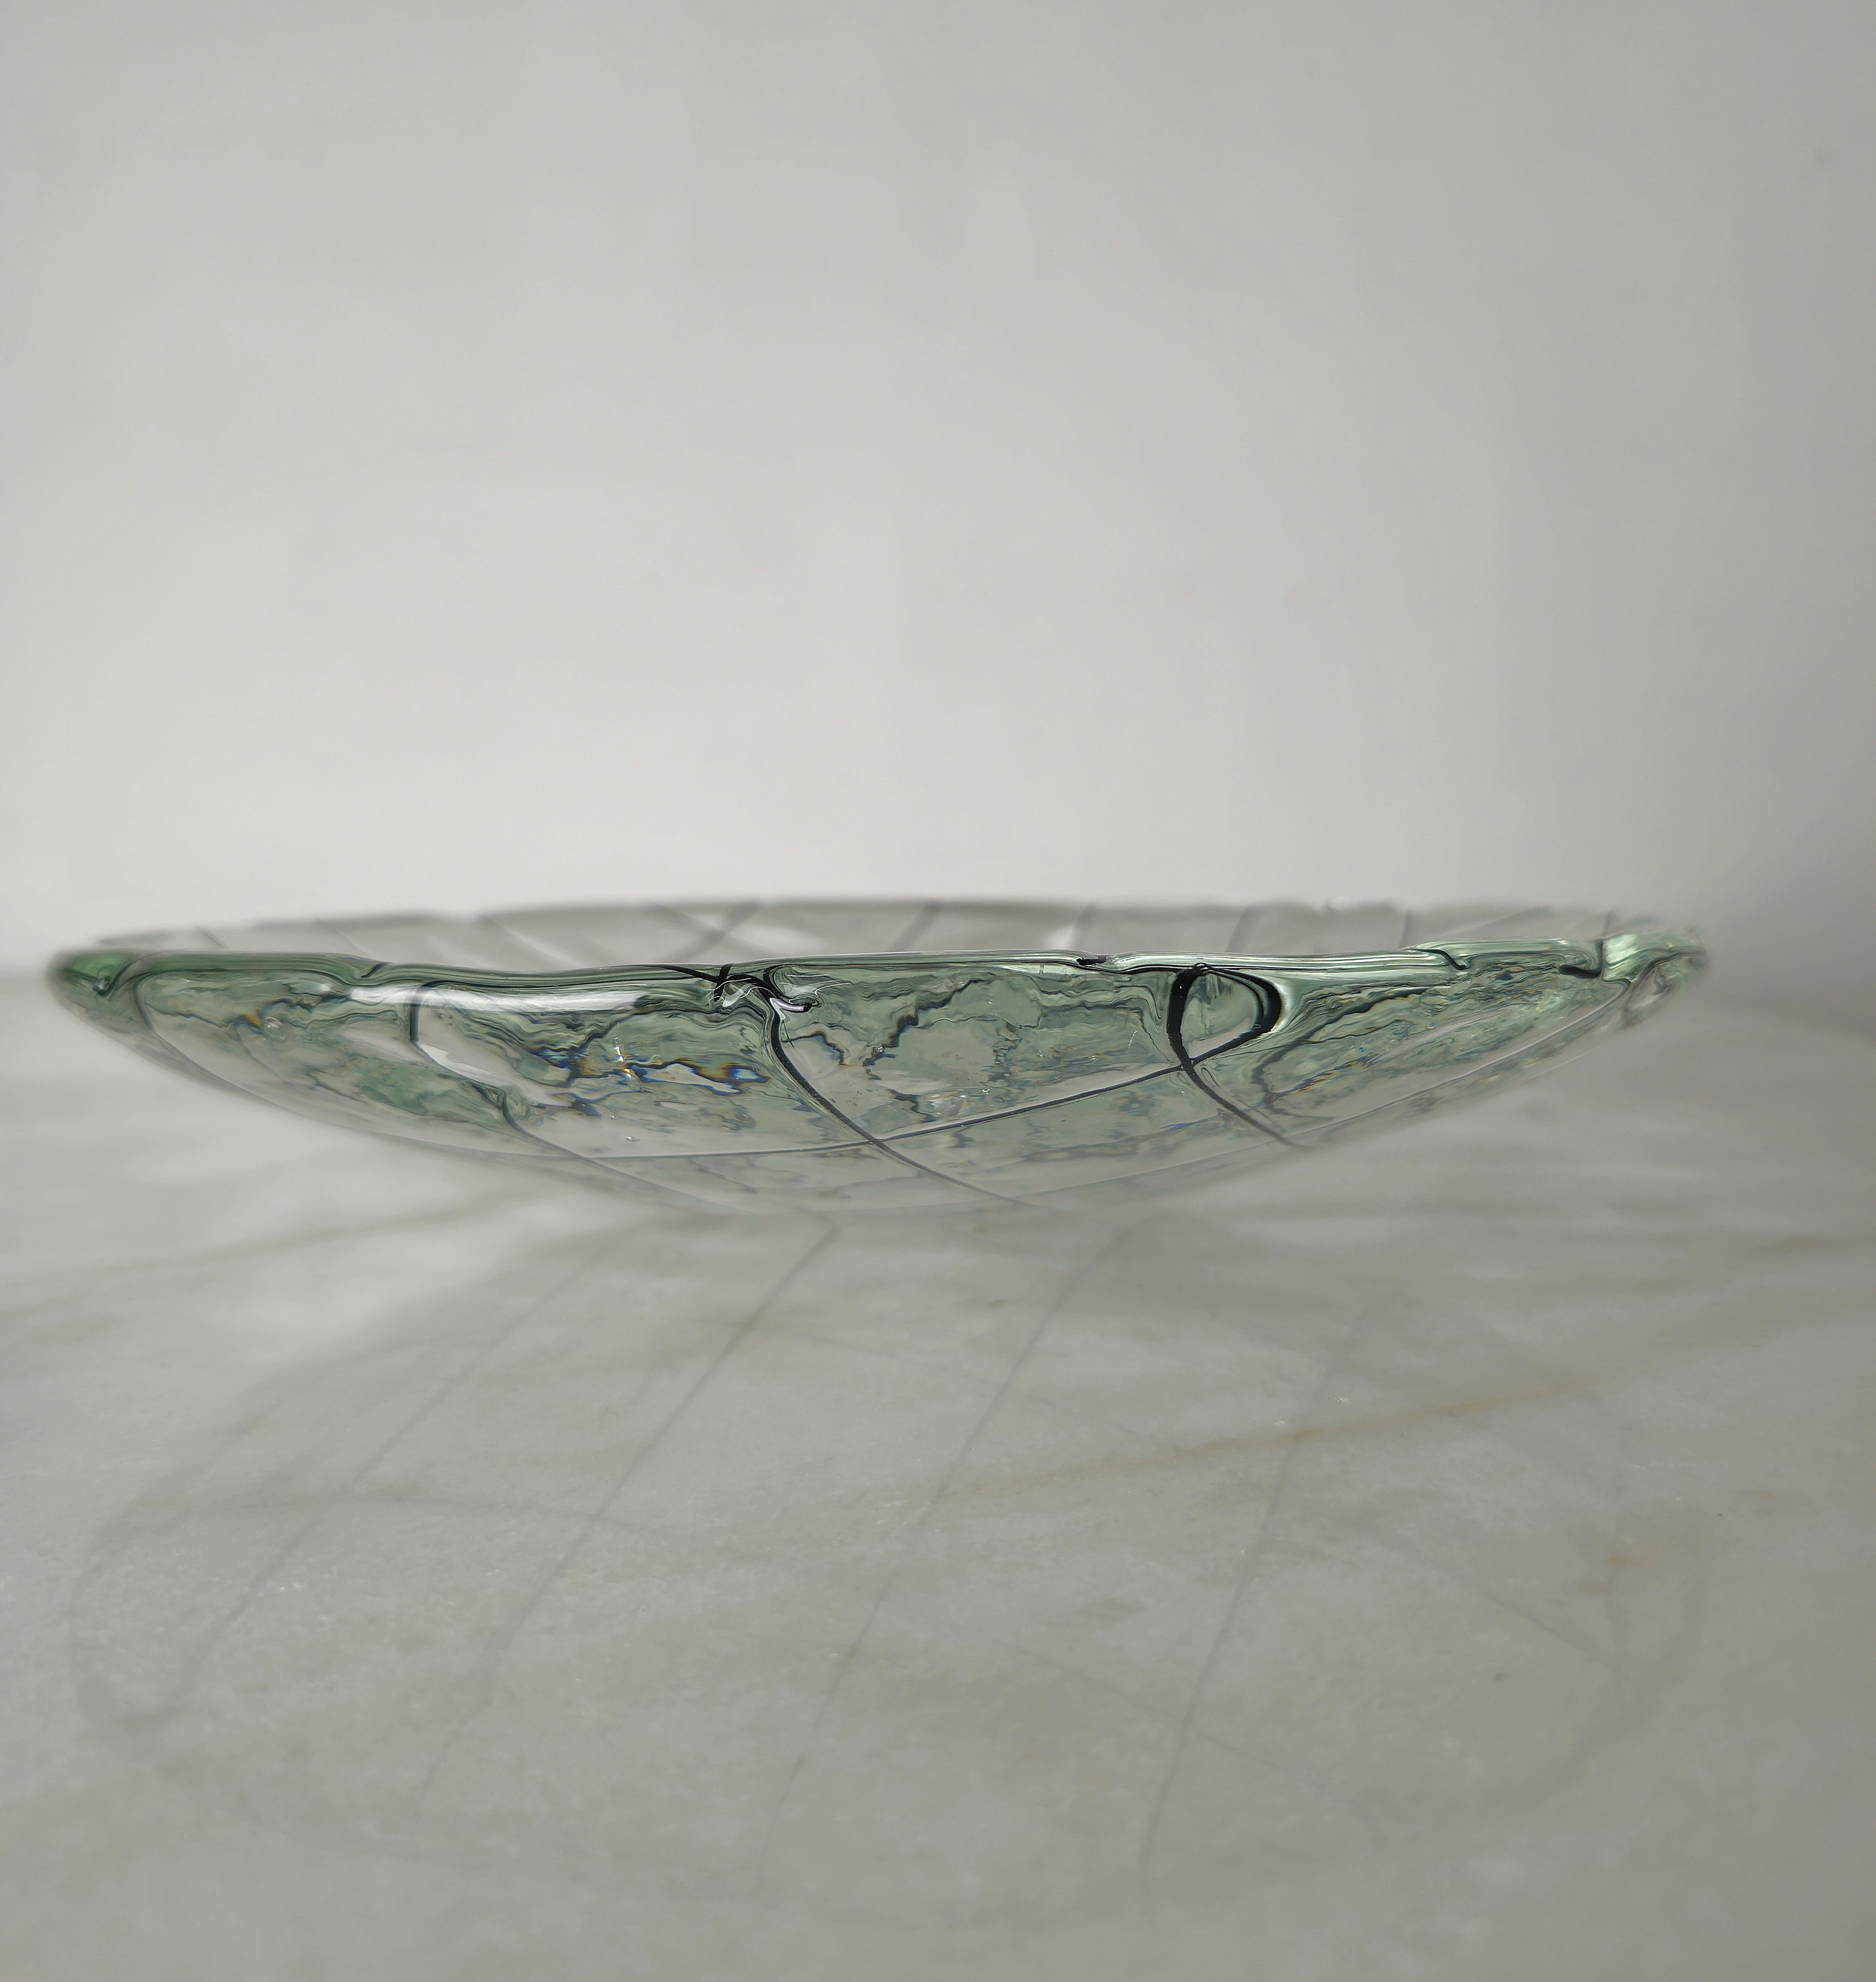 Decorative Dish Murano Glass Circular Midcentury Modern Italian Design 1950s For Sale 3